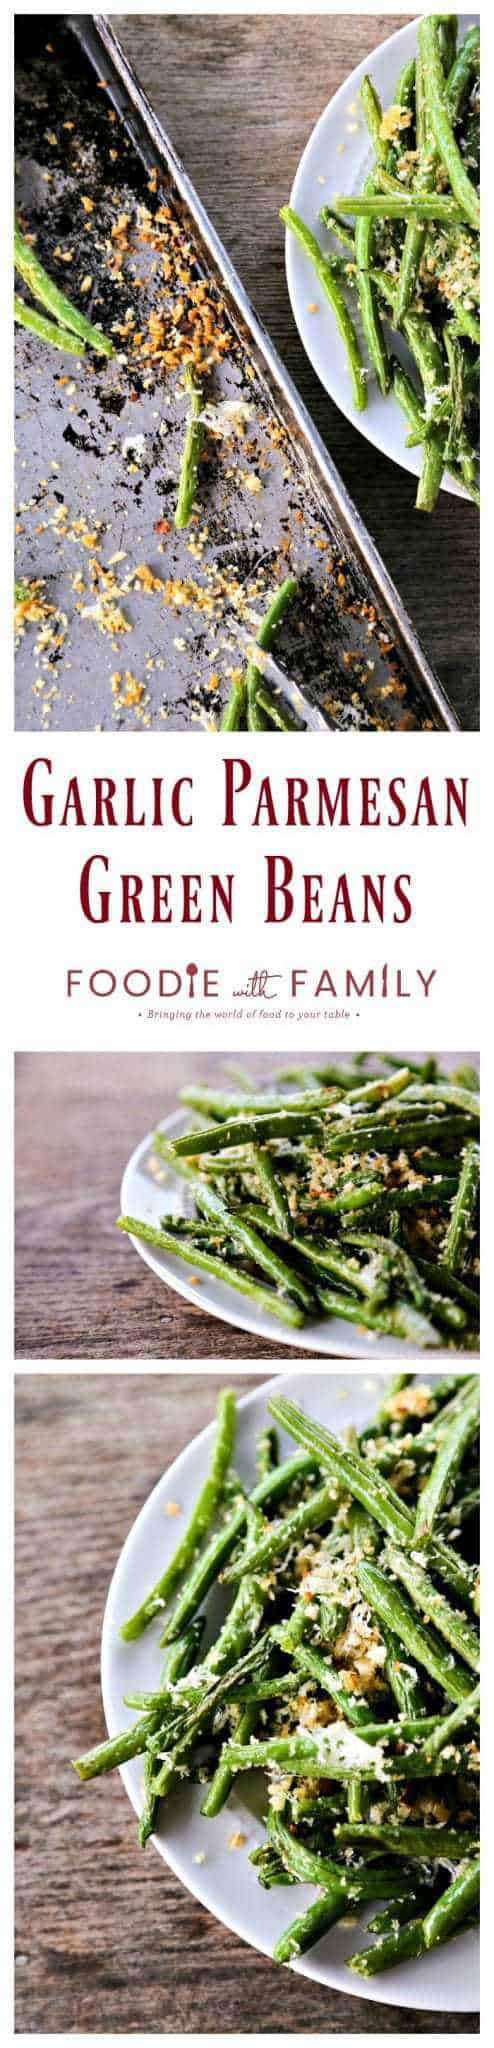 Garlic Parmesan Green Beans: Simple roasted green beans irresistibly coated in crispy garlic, parmesan breadcrumbs.